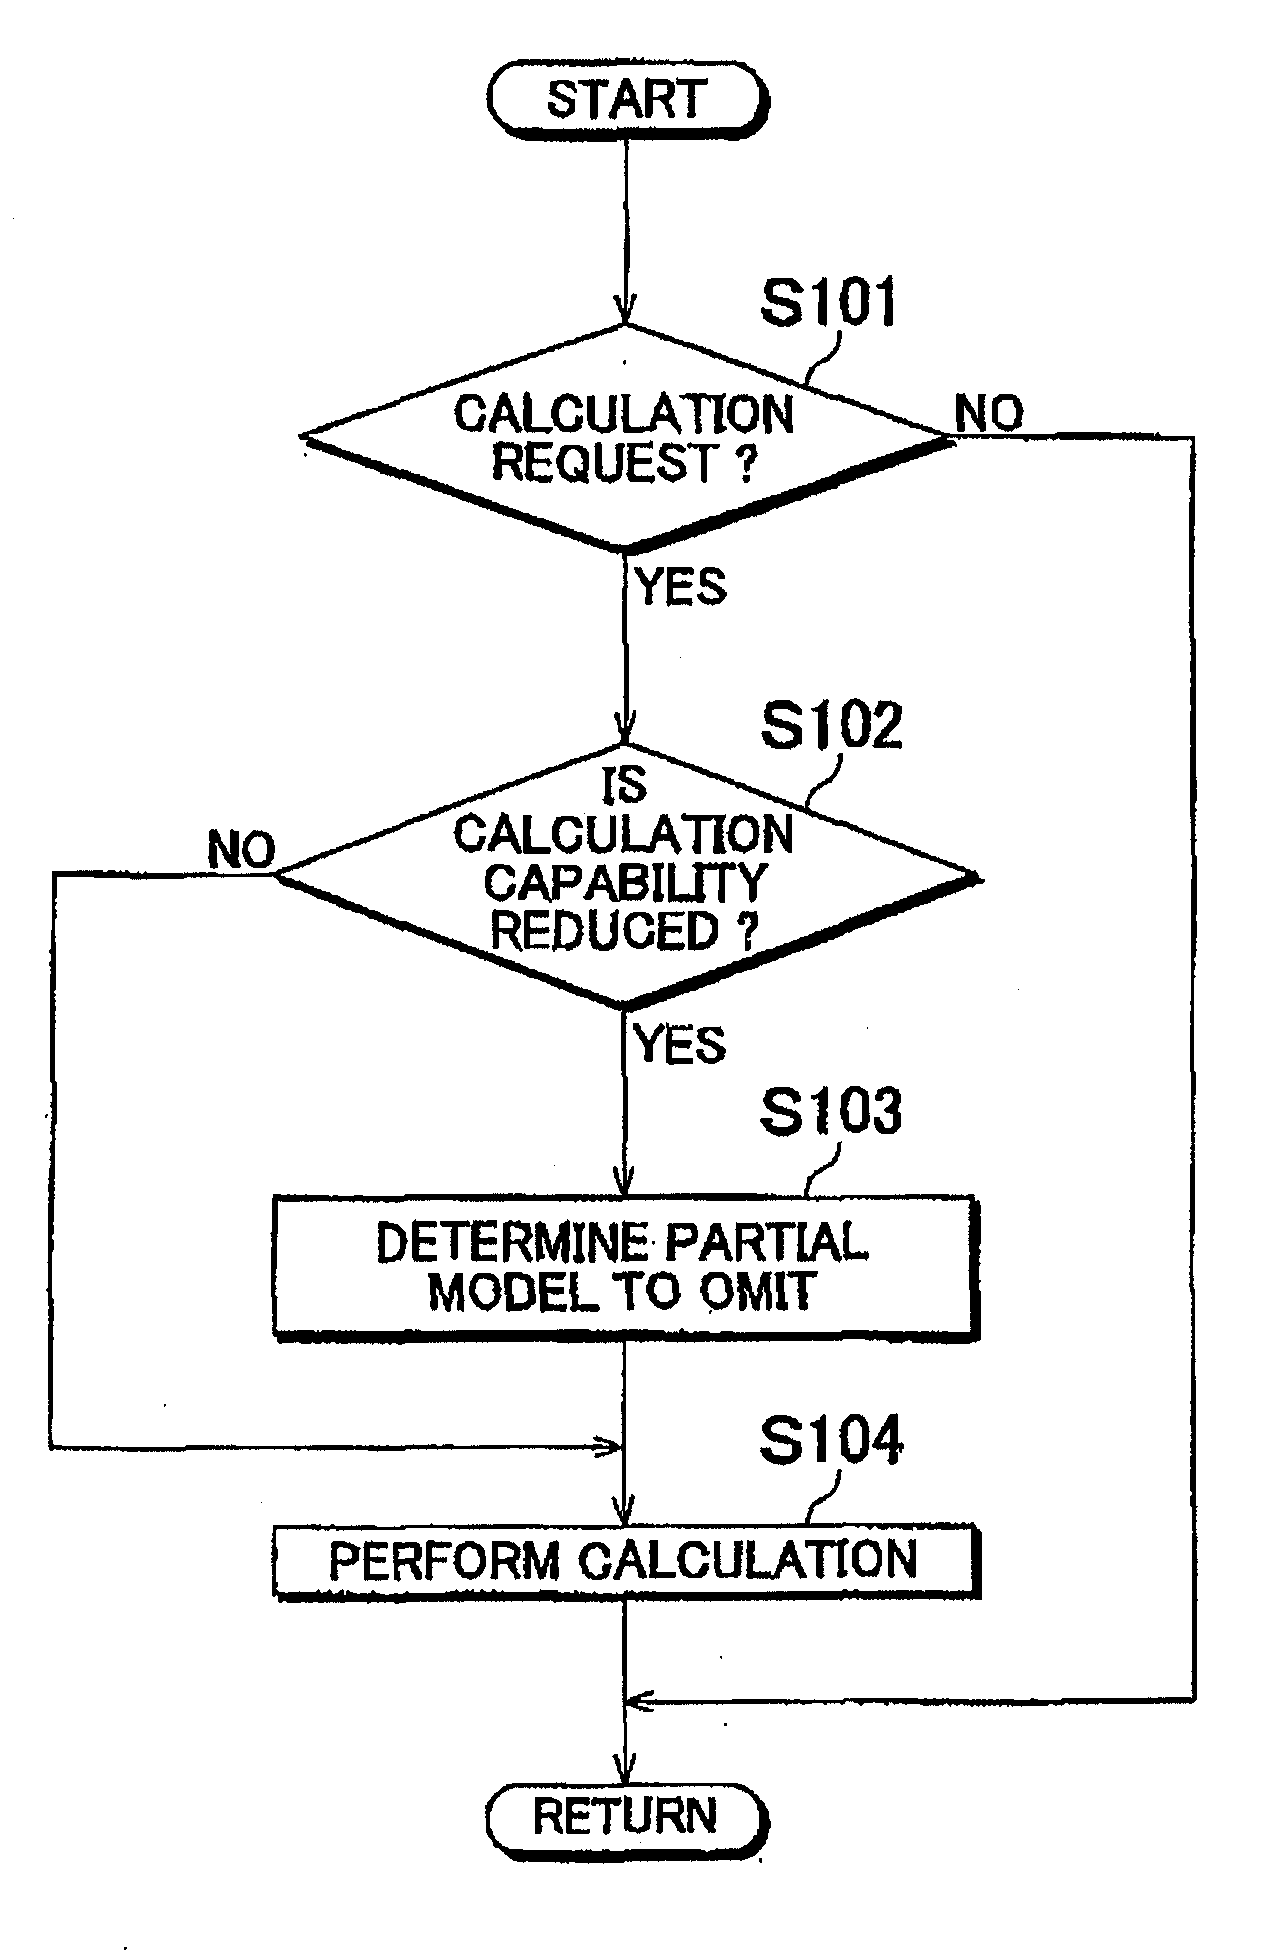 Model simplification method for use in model-based development